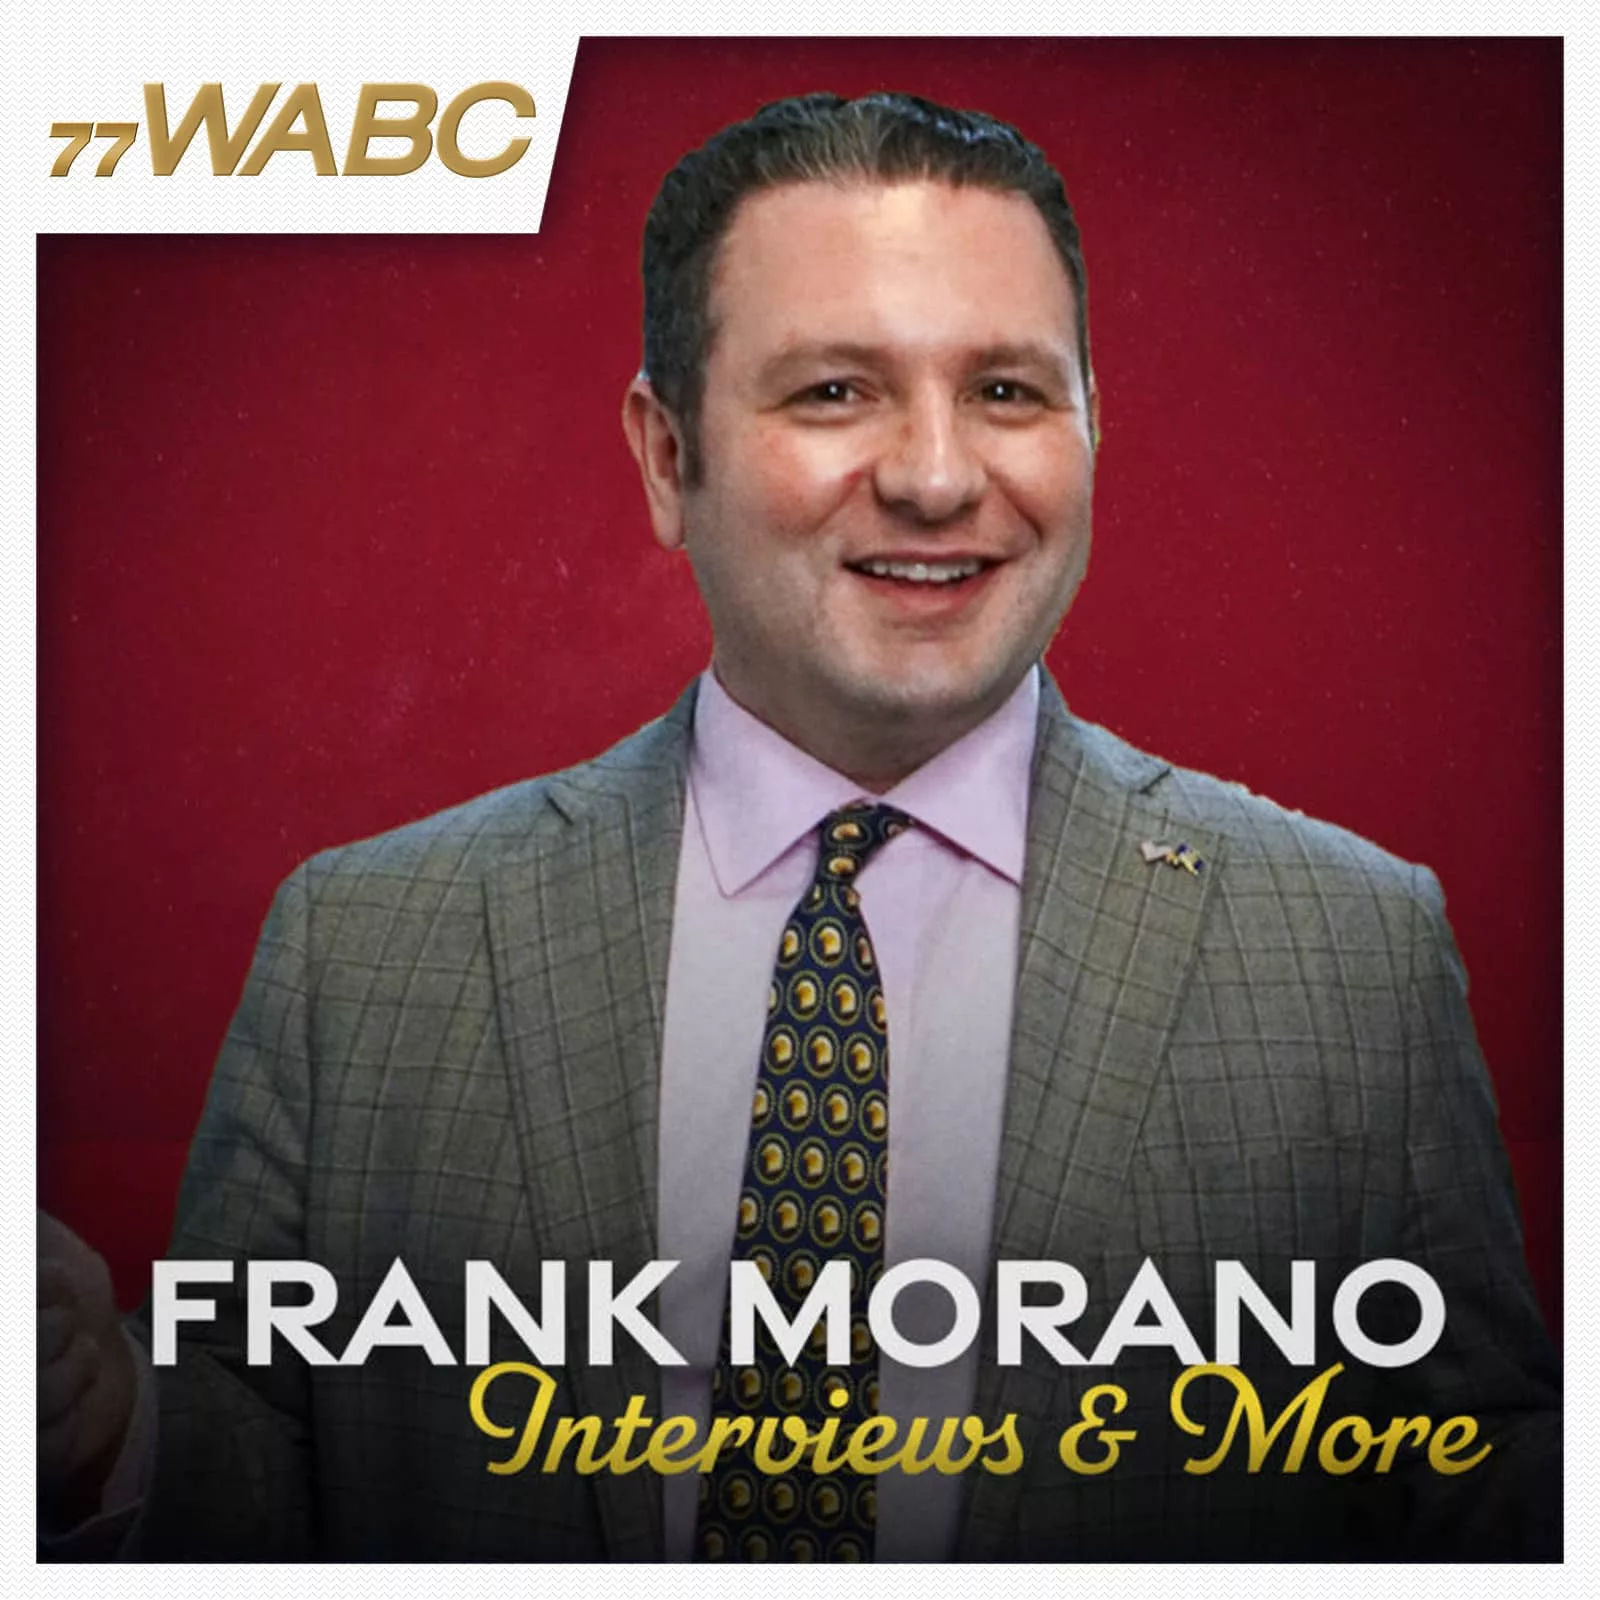 frank-morano-interviews-and-more-podcast-new-logo753587